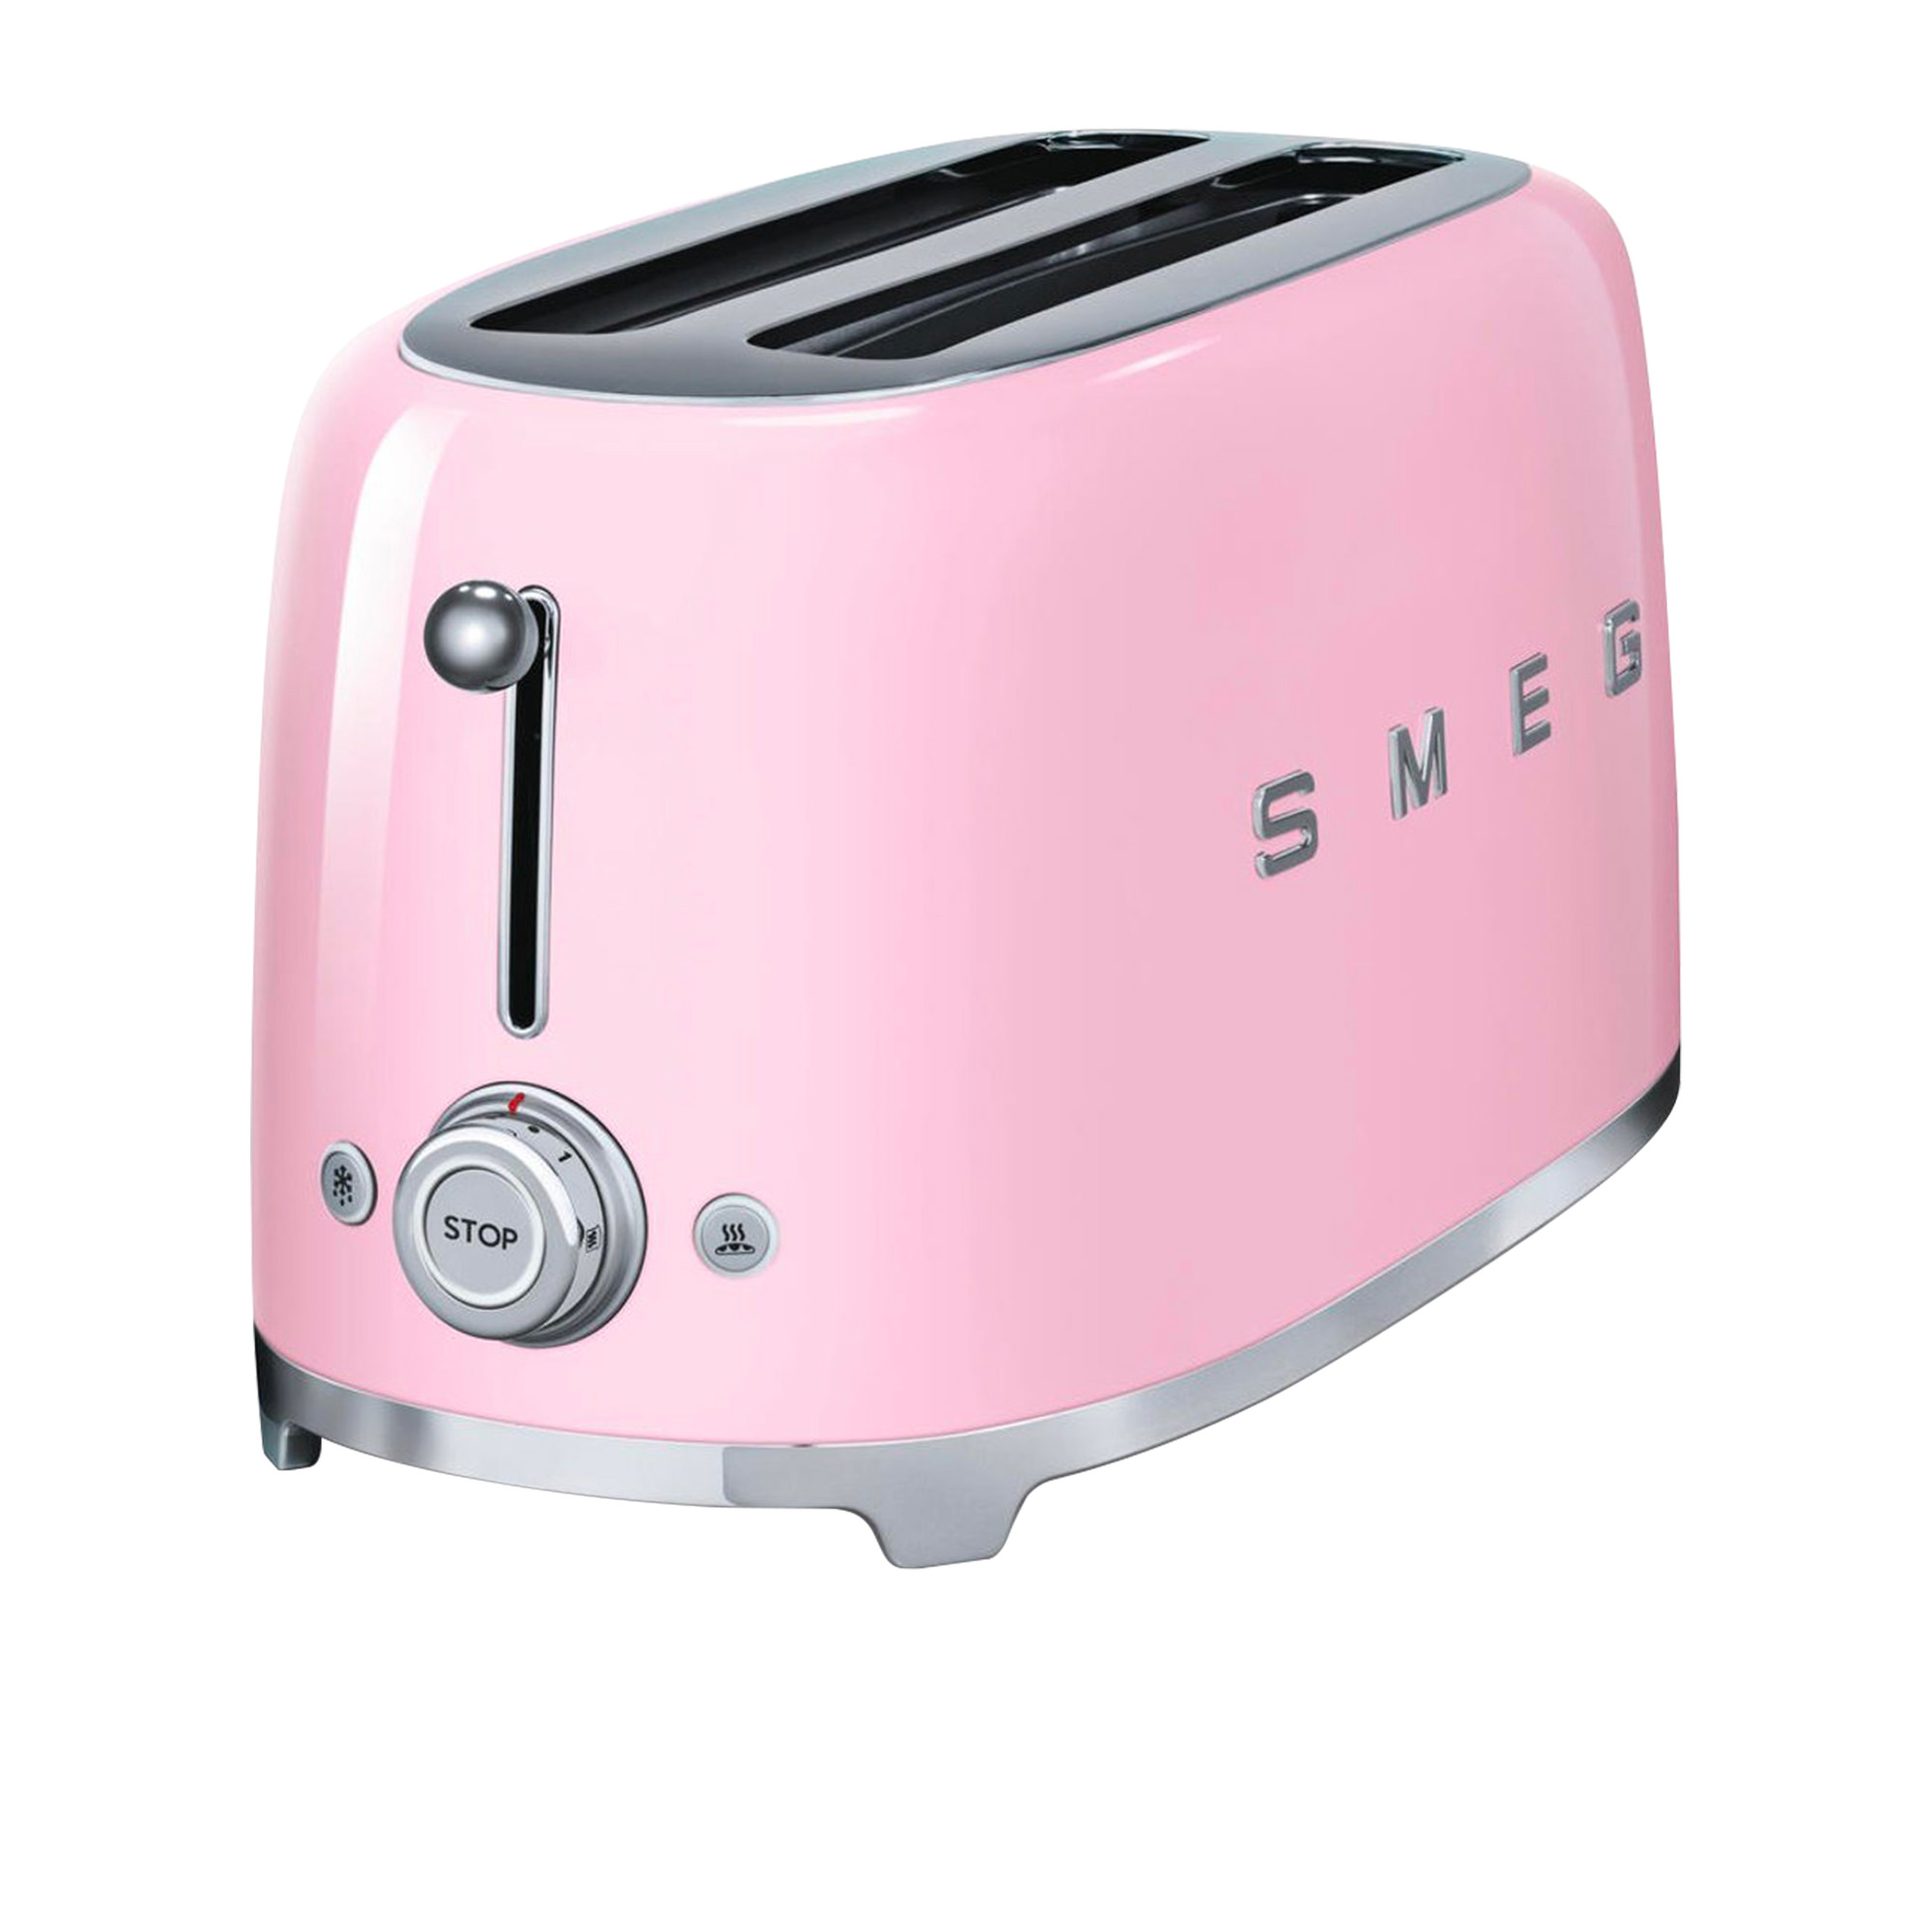 Smeg 50's Retro Style 4 Slice Toaster Pastel Pink Image 1